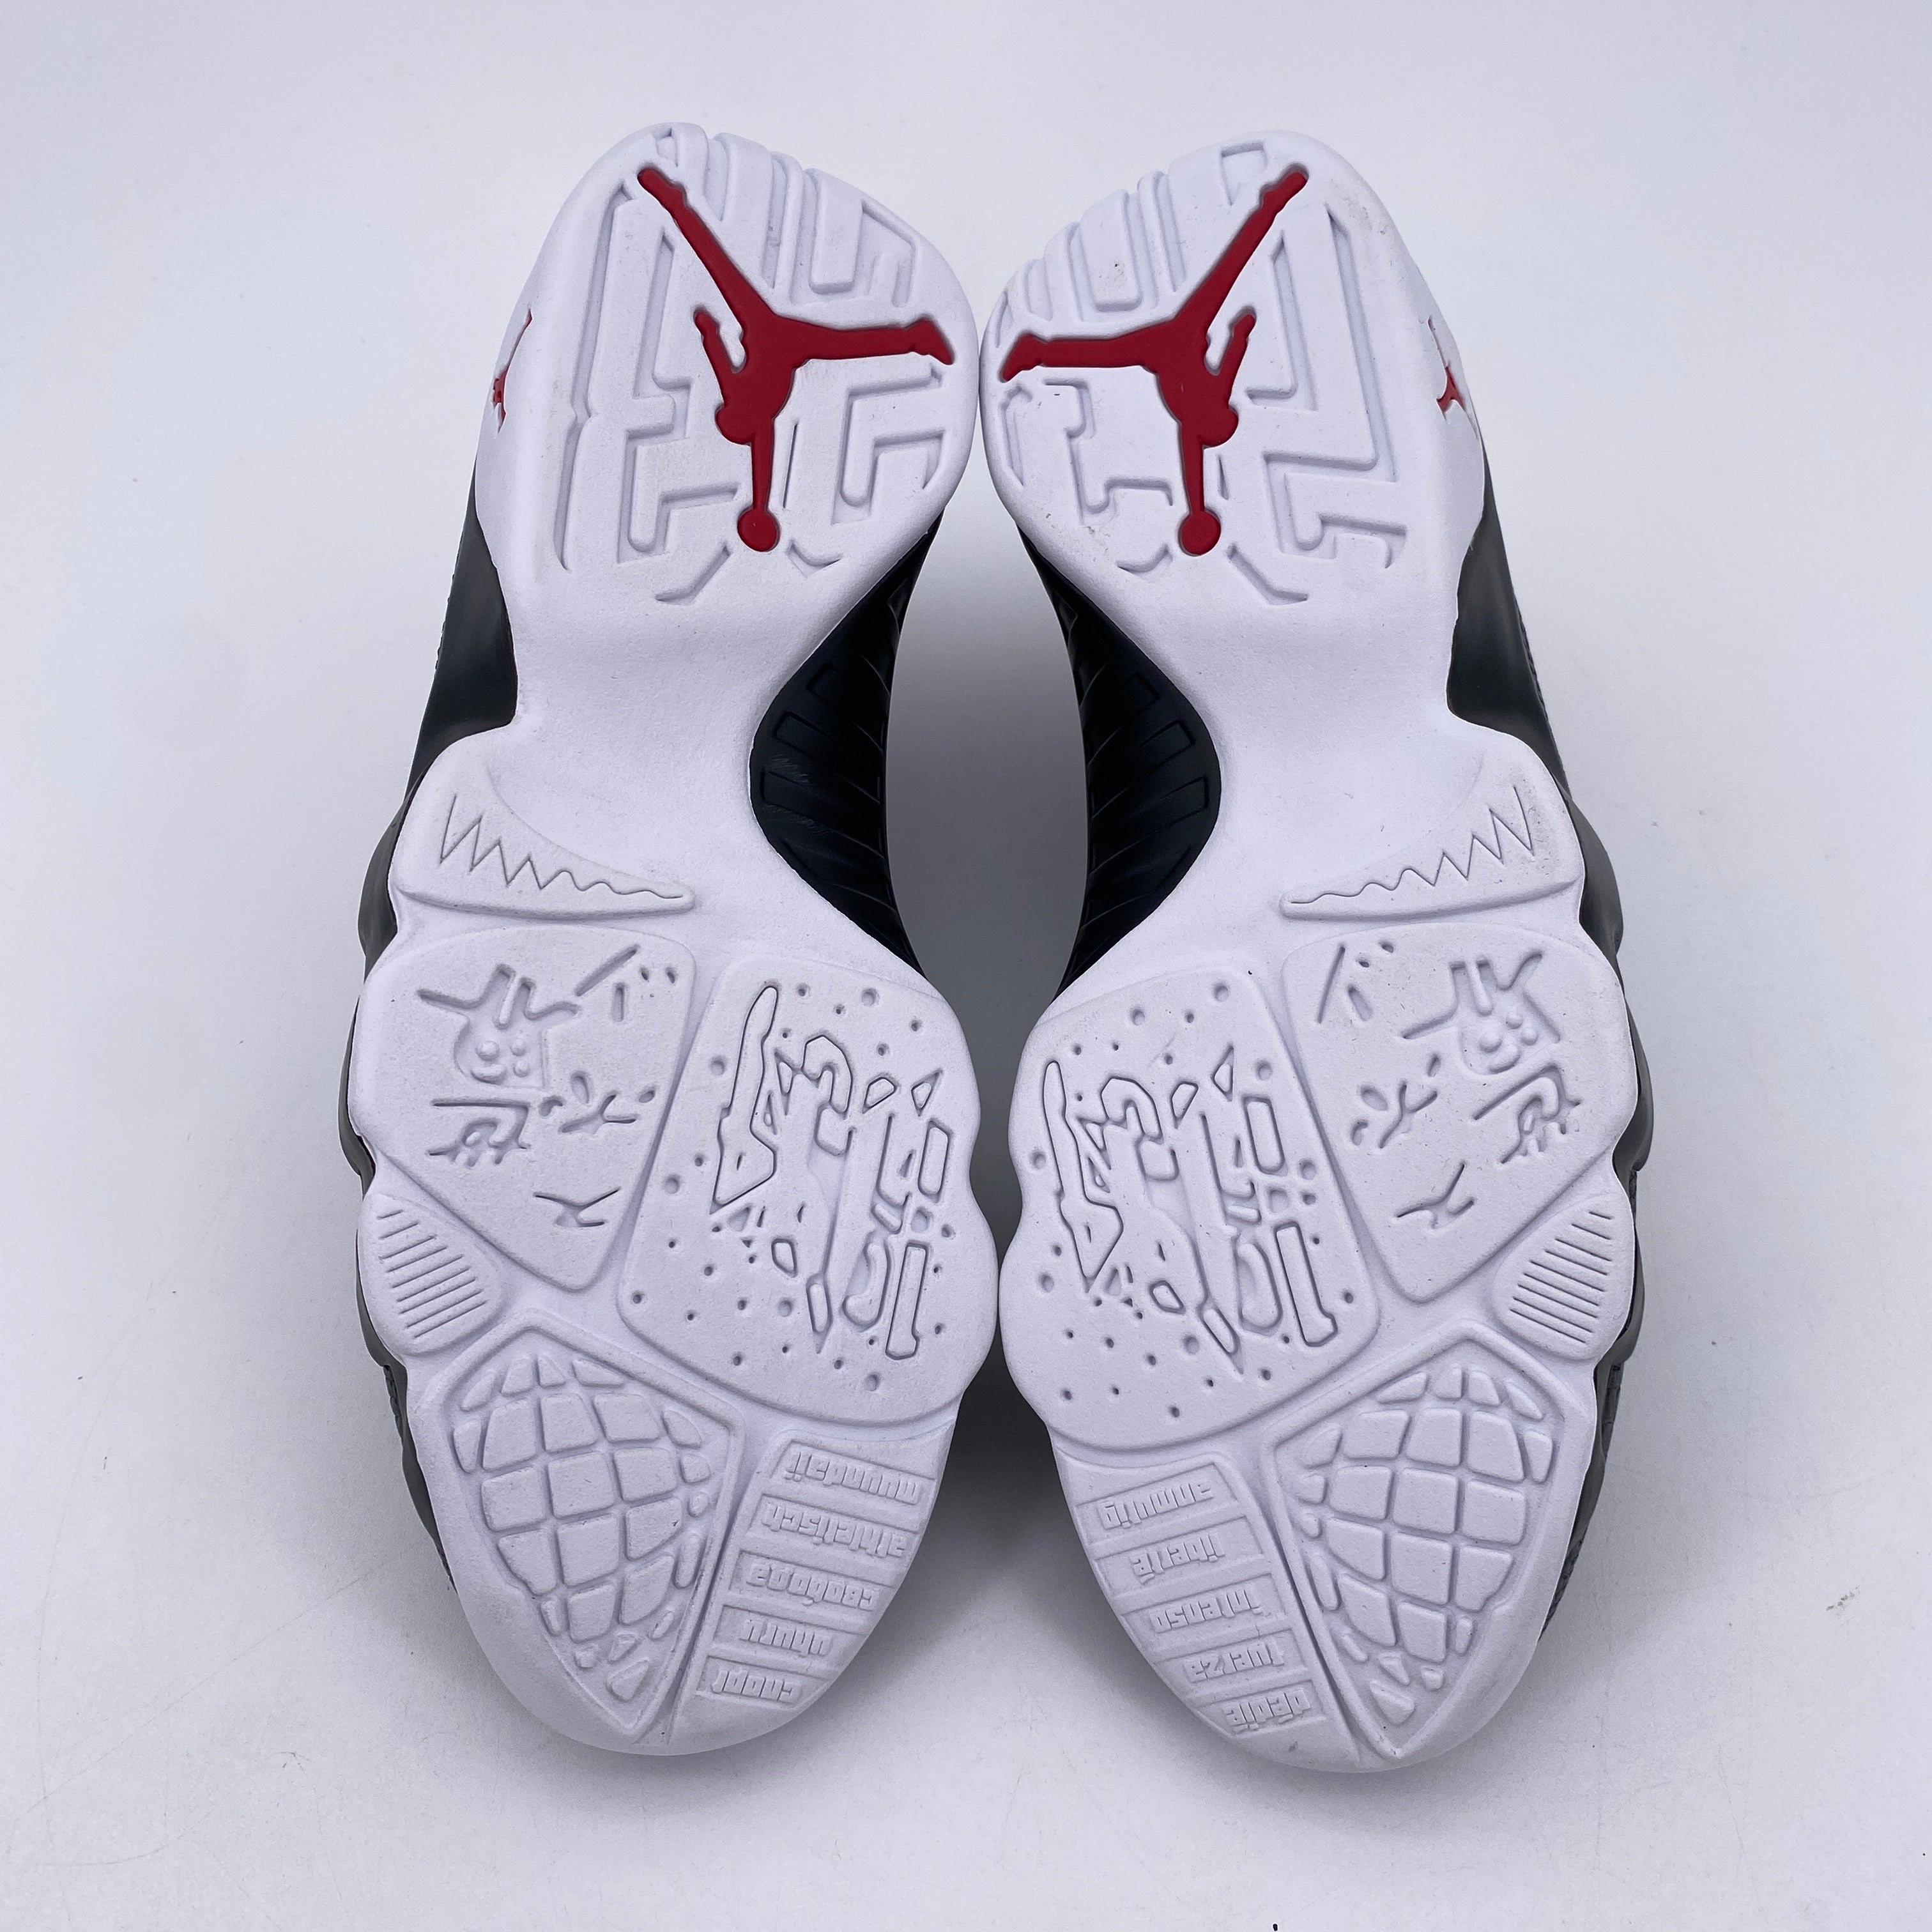 Air Jordan 9 Retro Low &quot;Snakeskin&quot; 2016 New Size 8.5